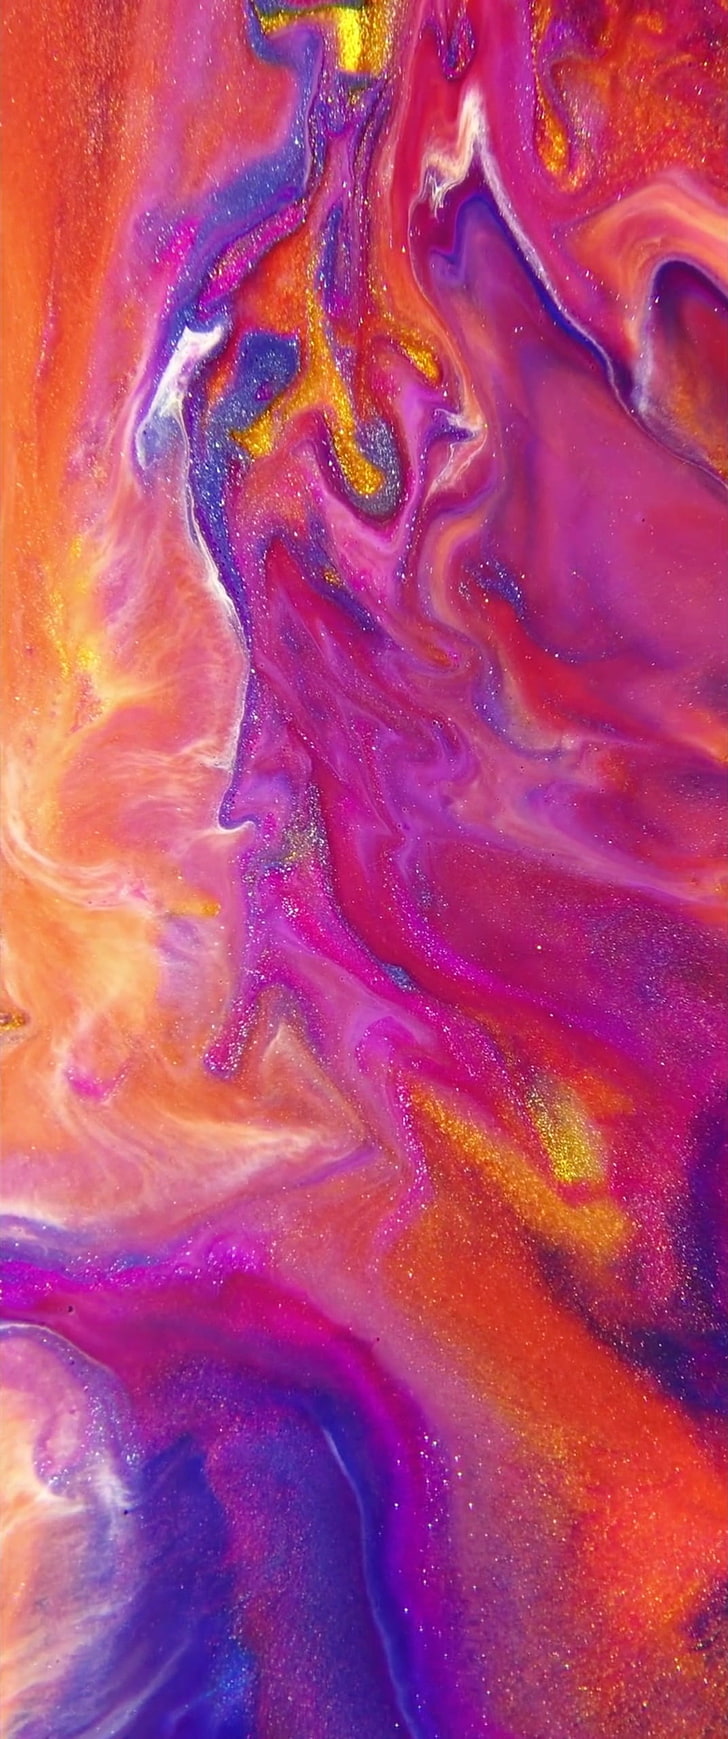 HD wallpaper: purple and orange artwork, Ipod, iPhone, iPad, iOS, colorful  | Wallpaper Flare